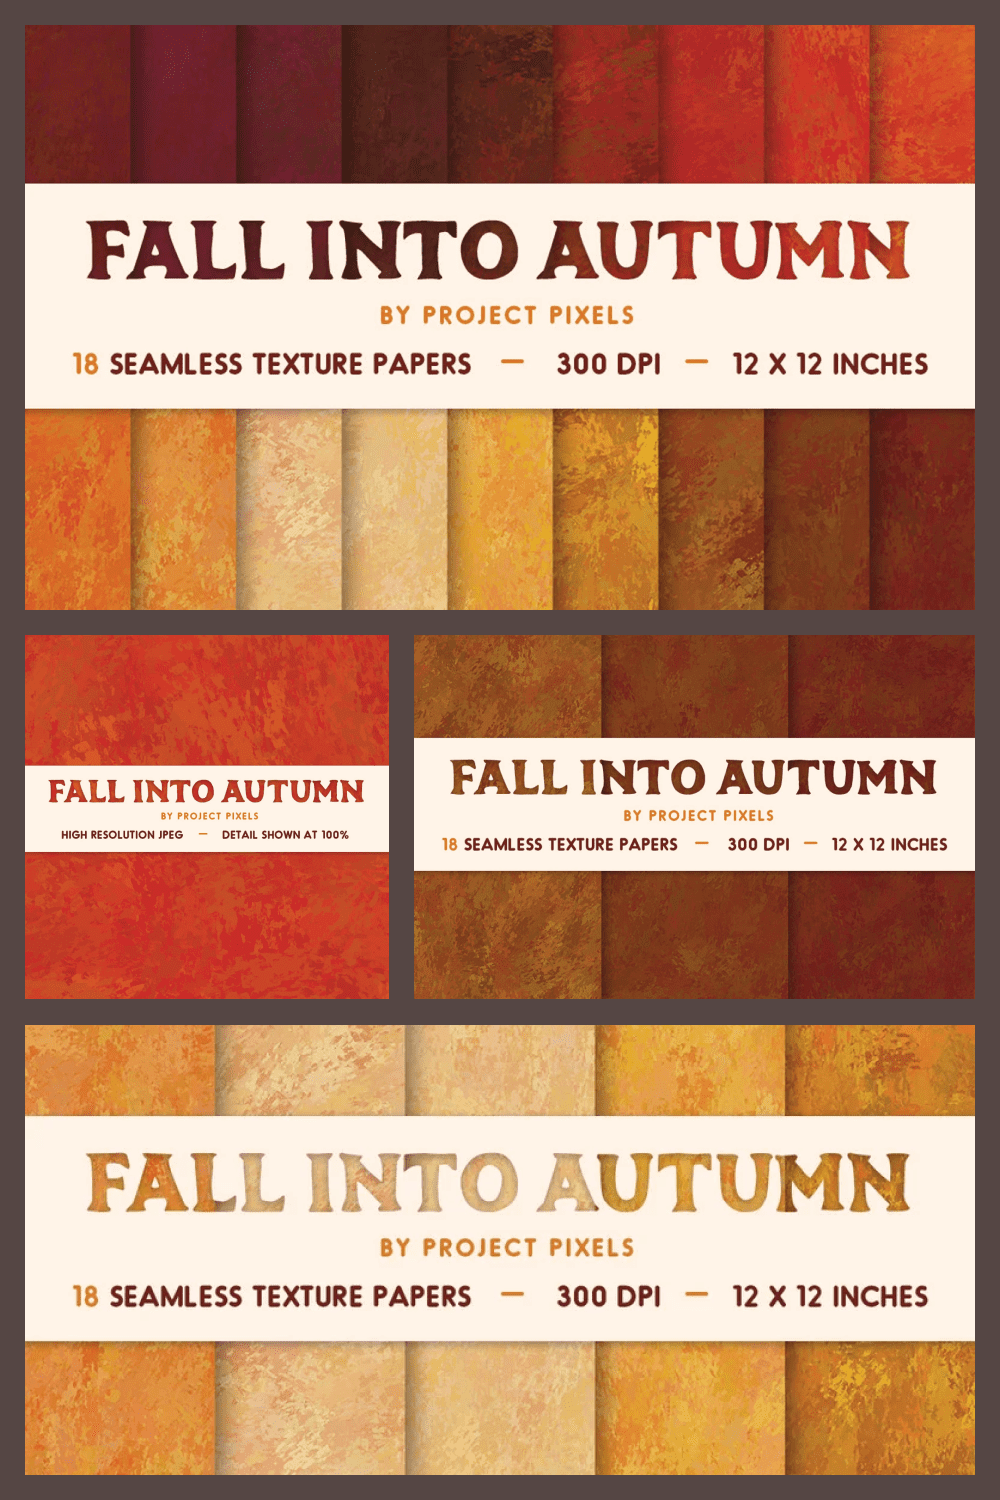 Fall into autumn digital paper textures.